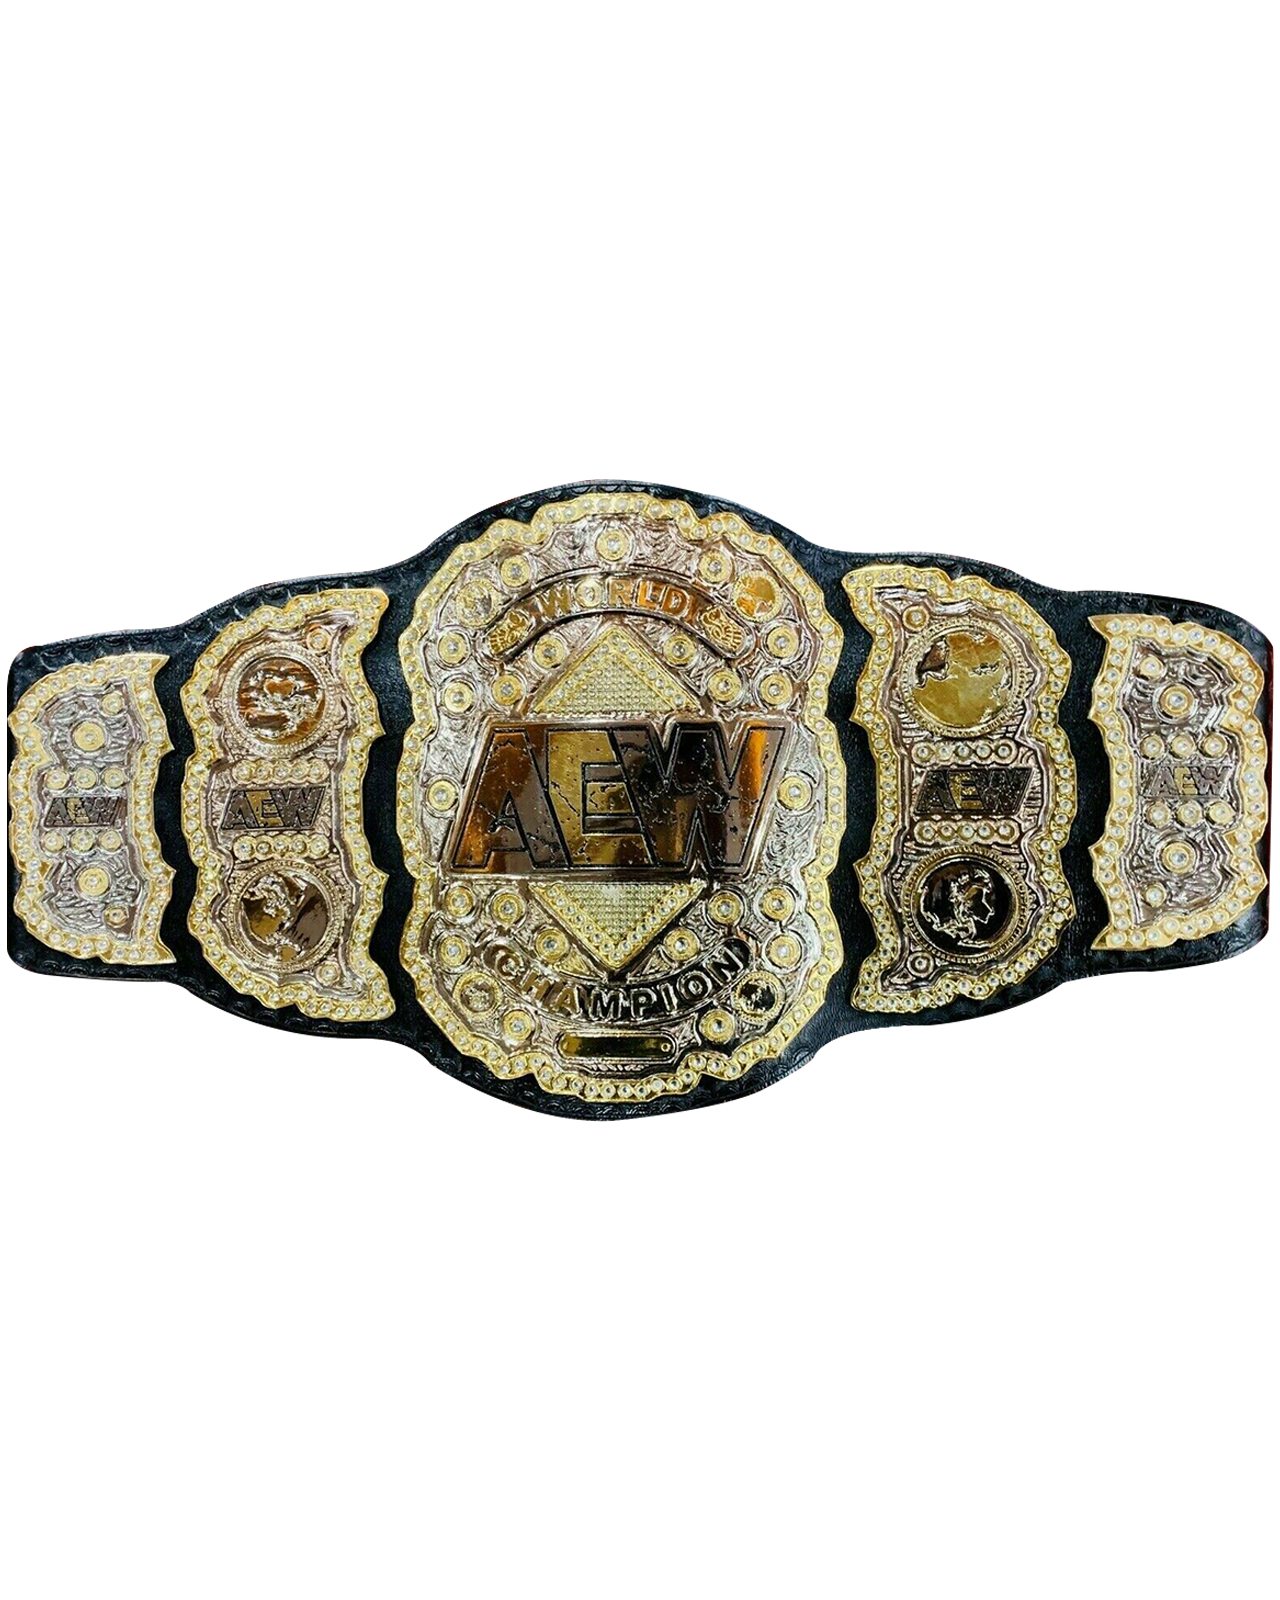 AEW World Championship Title Belt *BRAND NEW* 